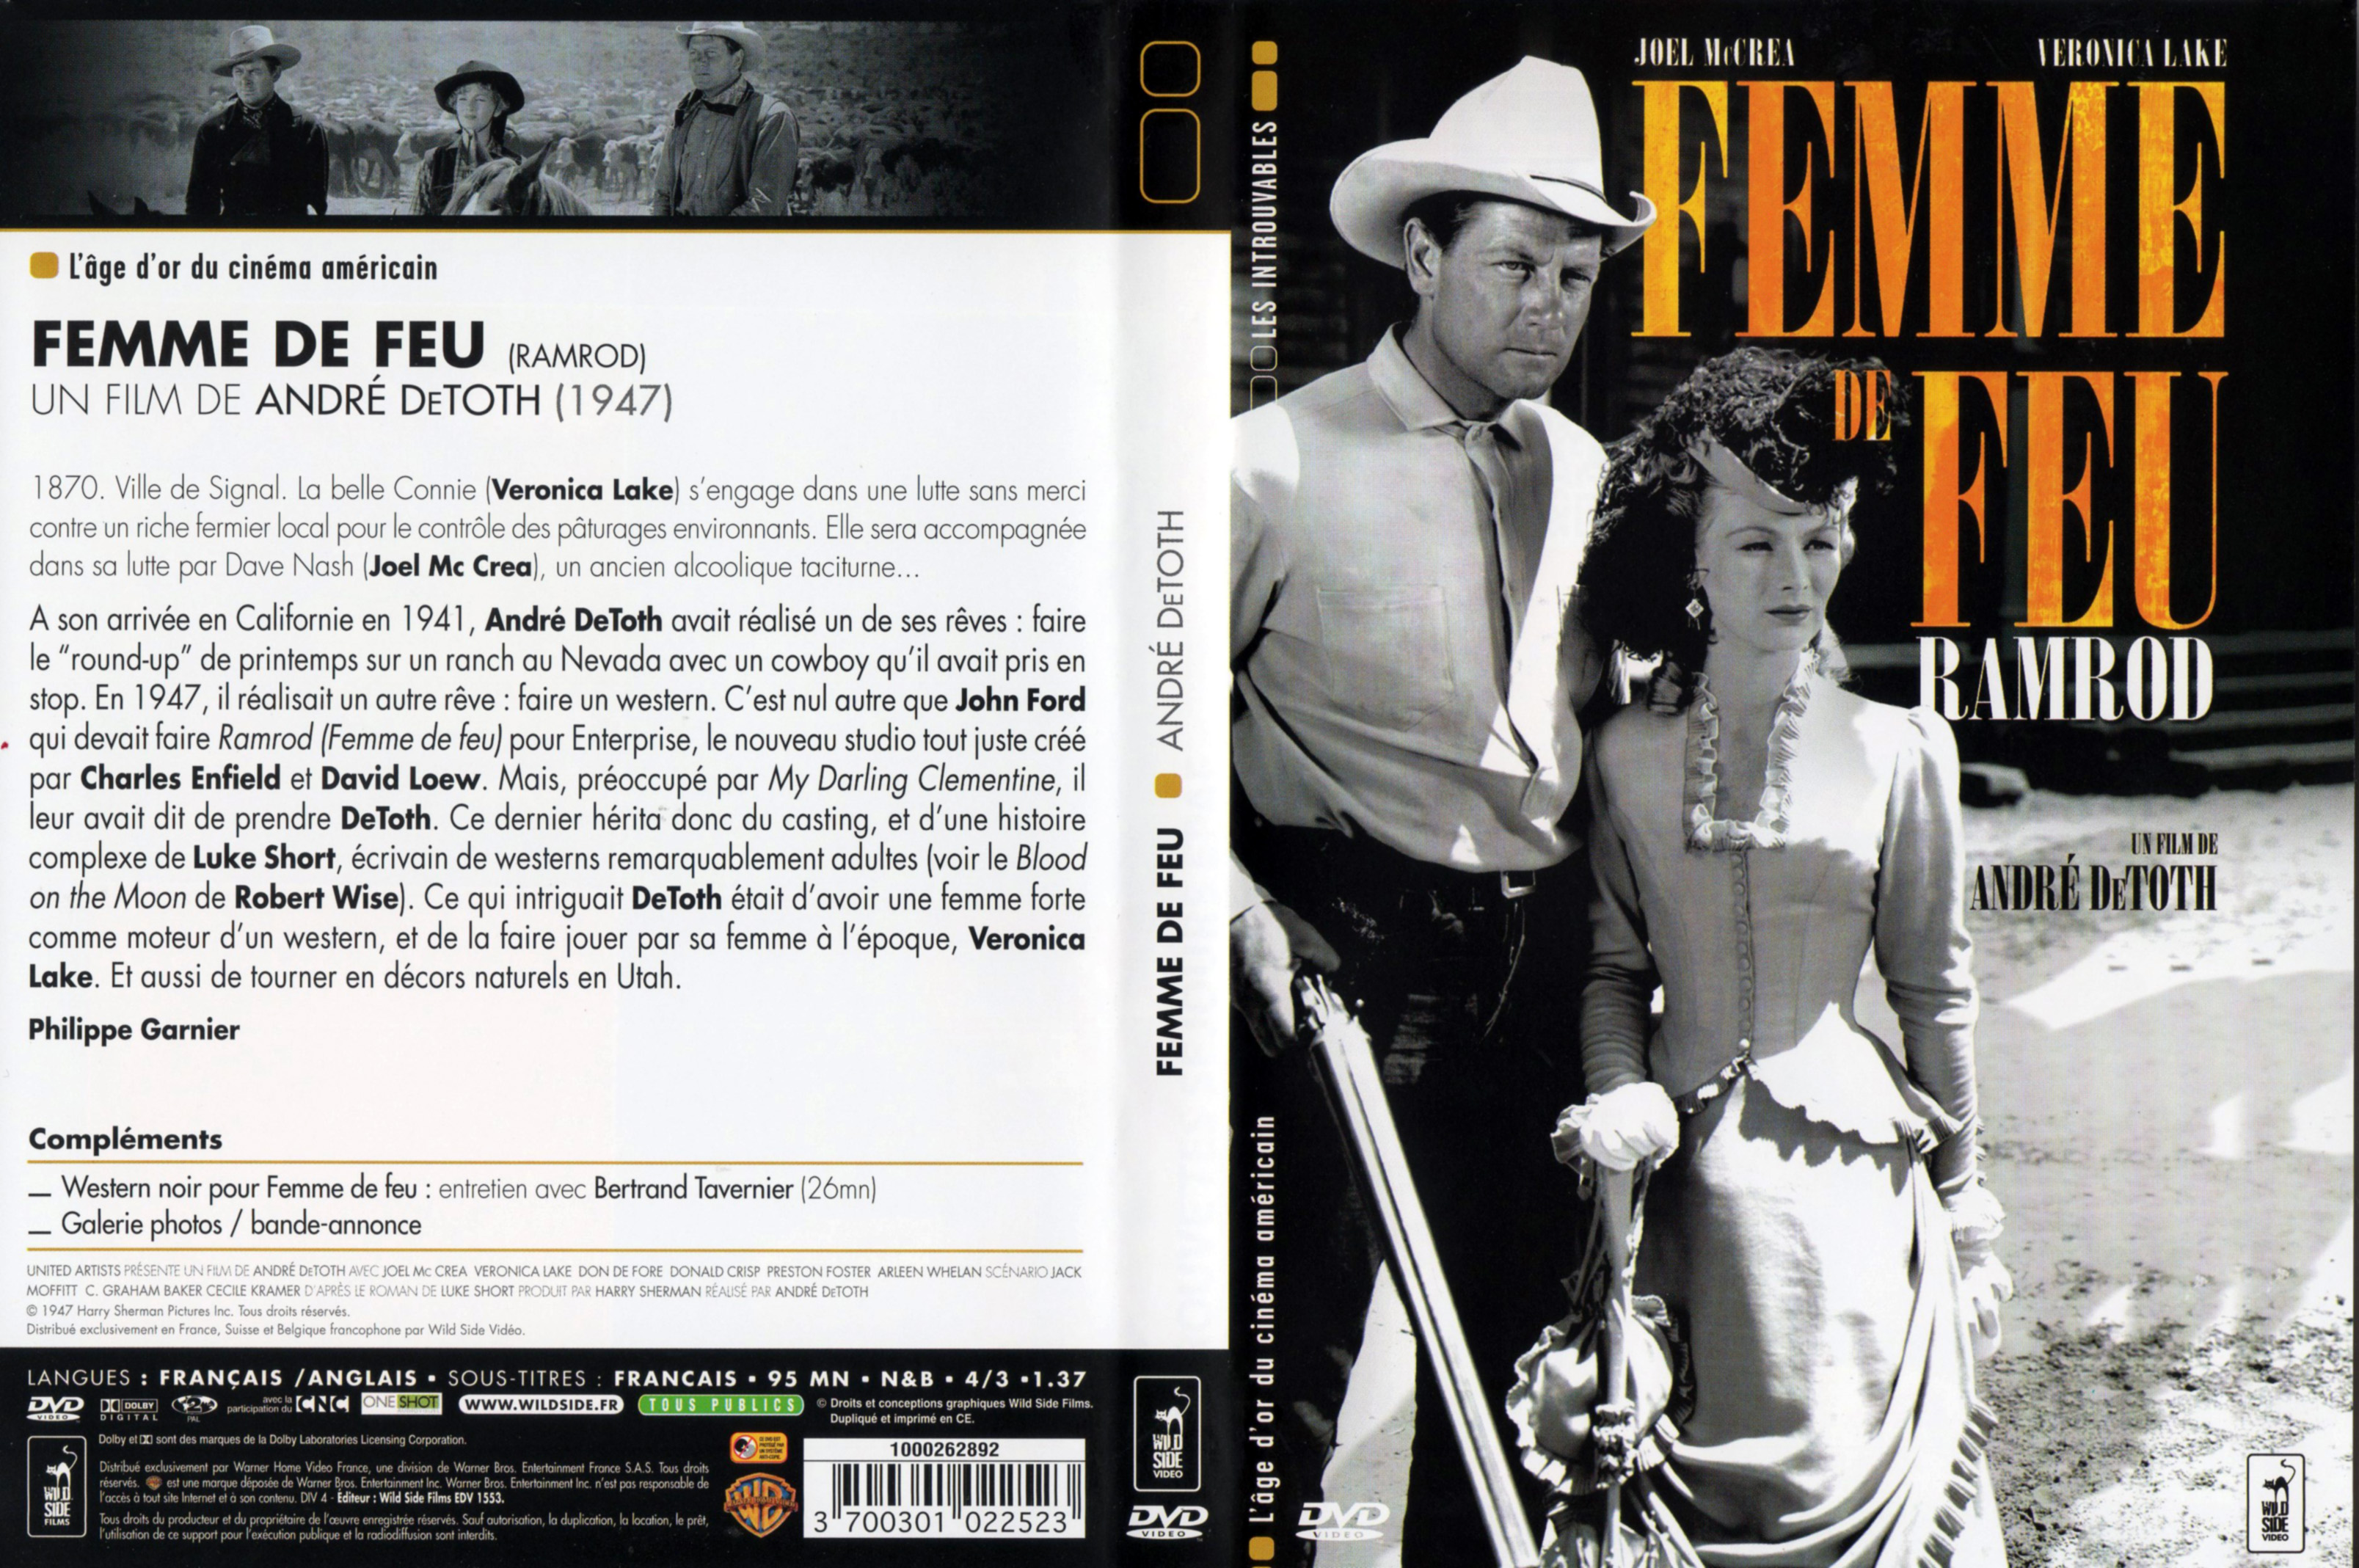 Jaquette DVD Femme de feu